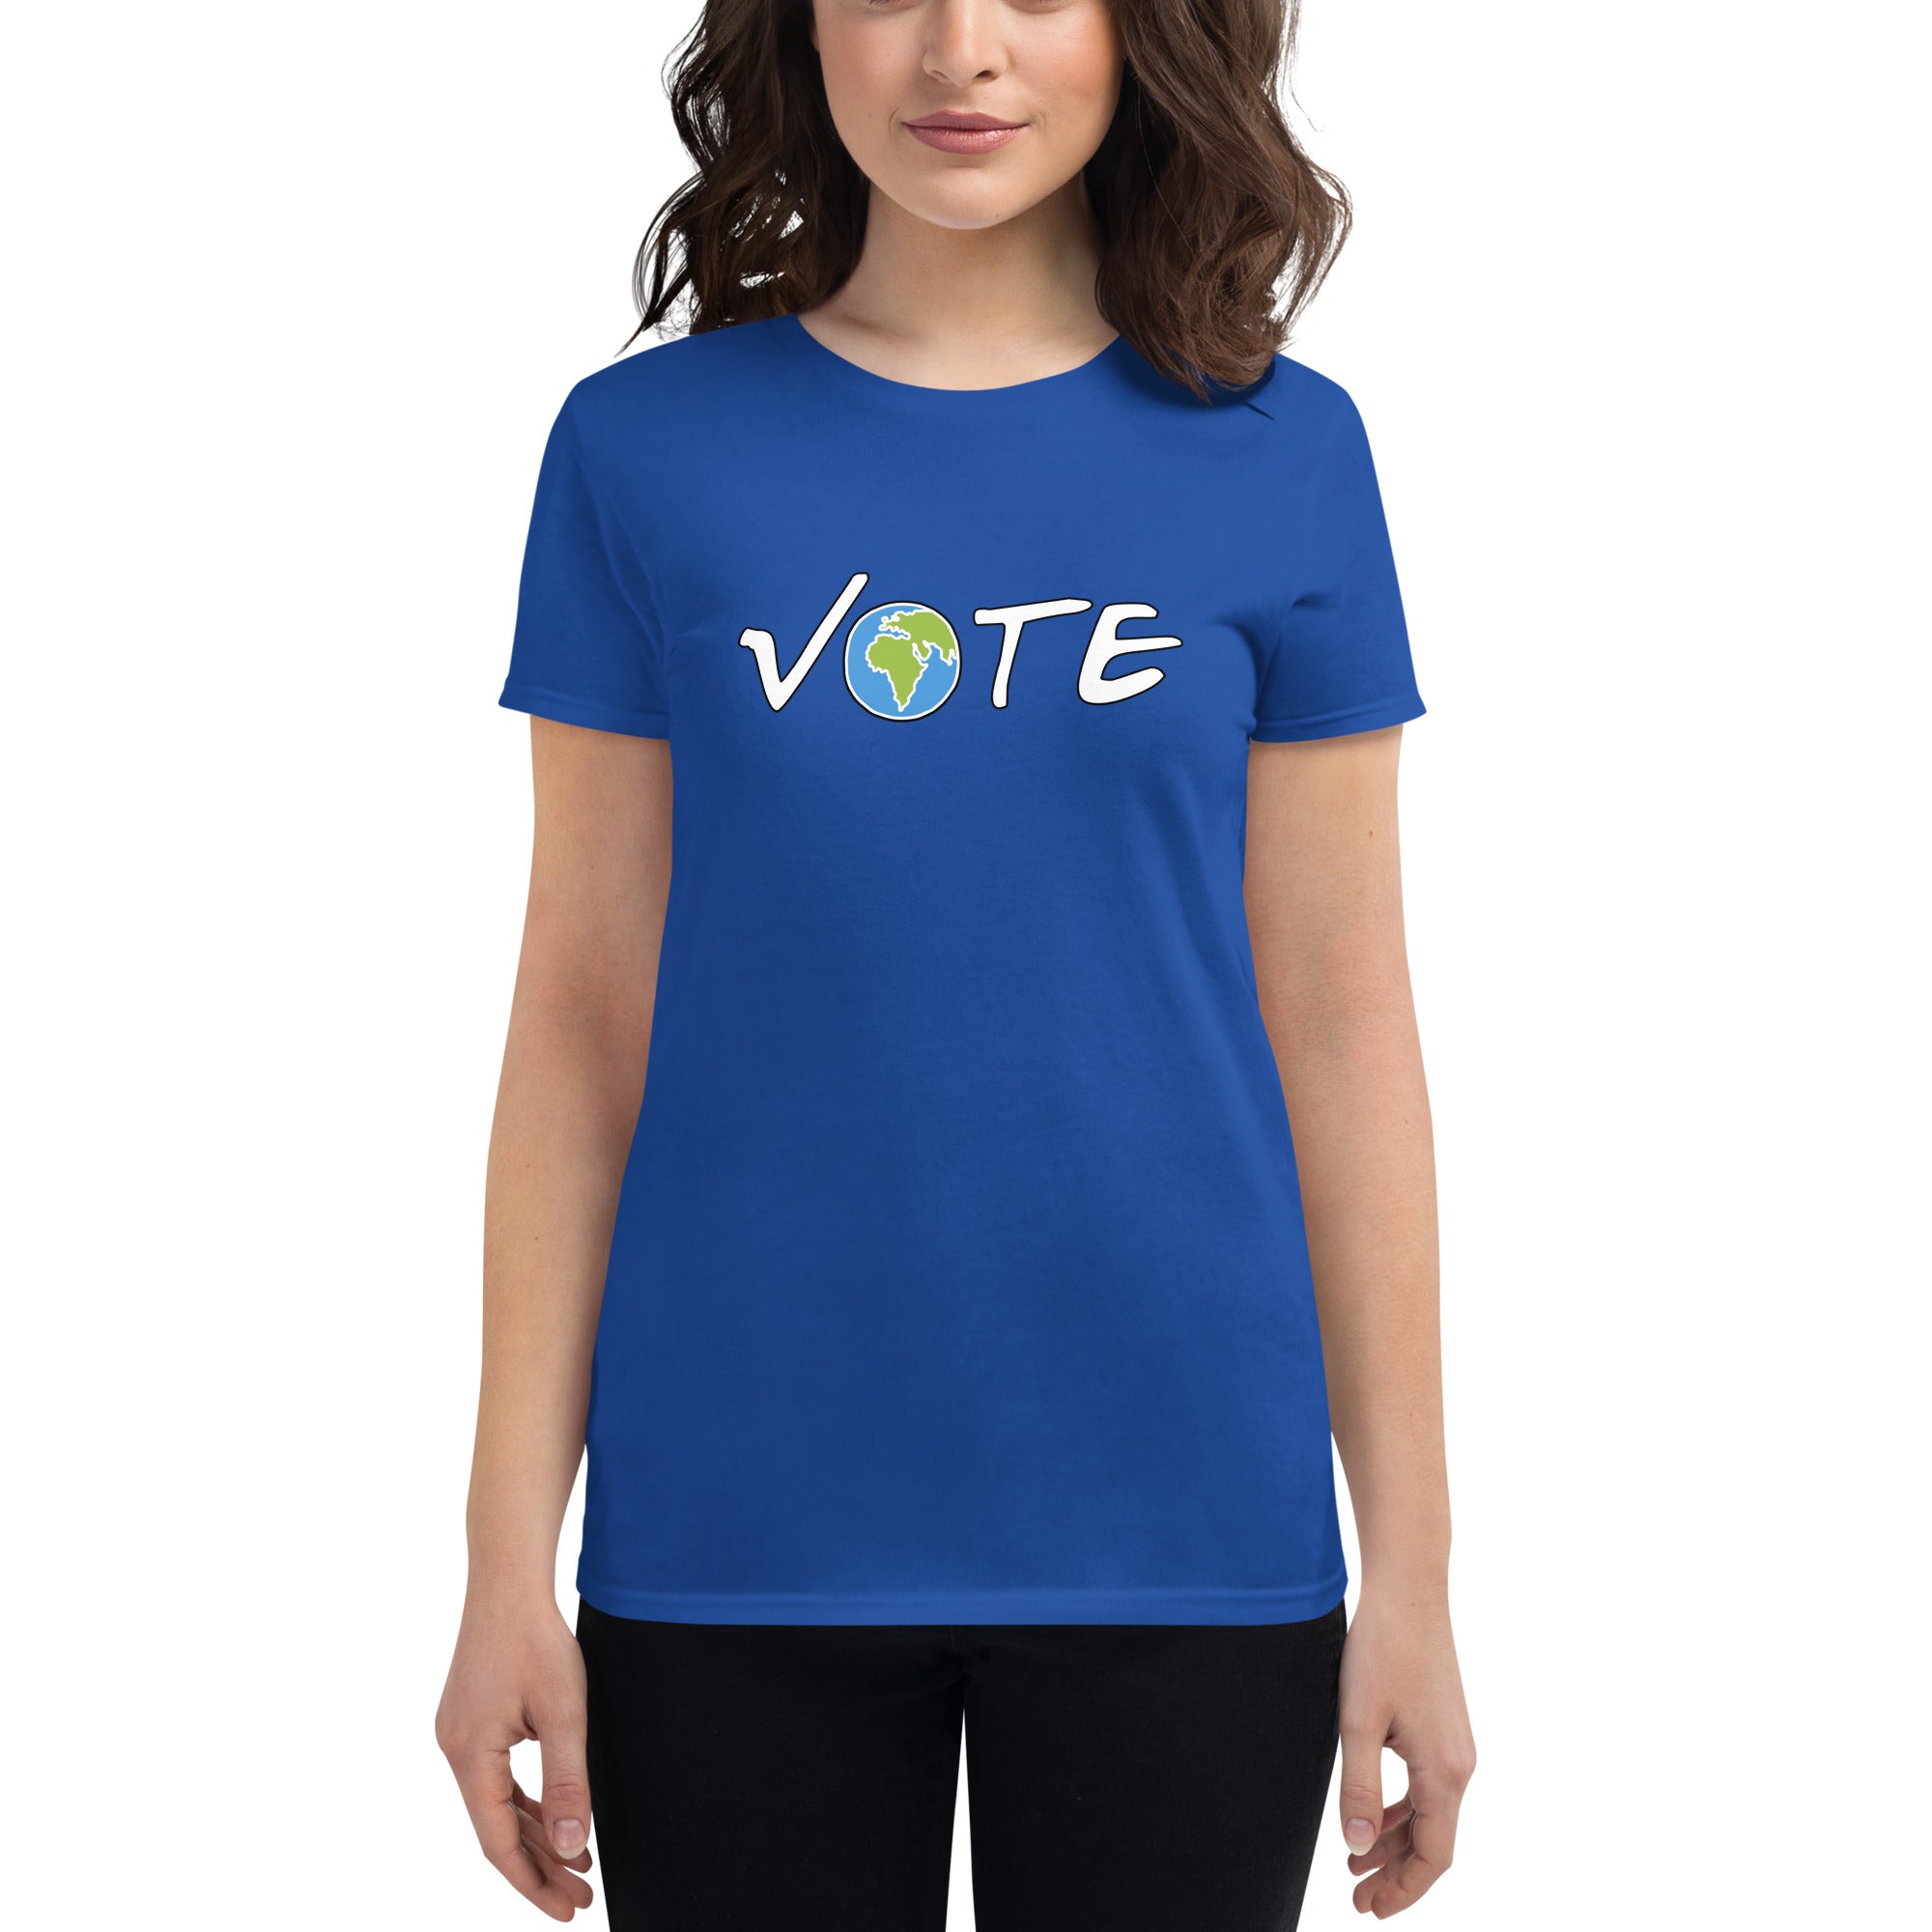 VOTE EARTH- Women's short sleeve t-shirt